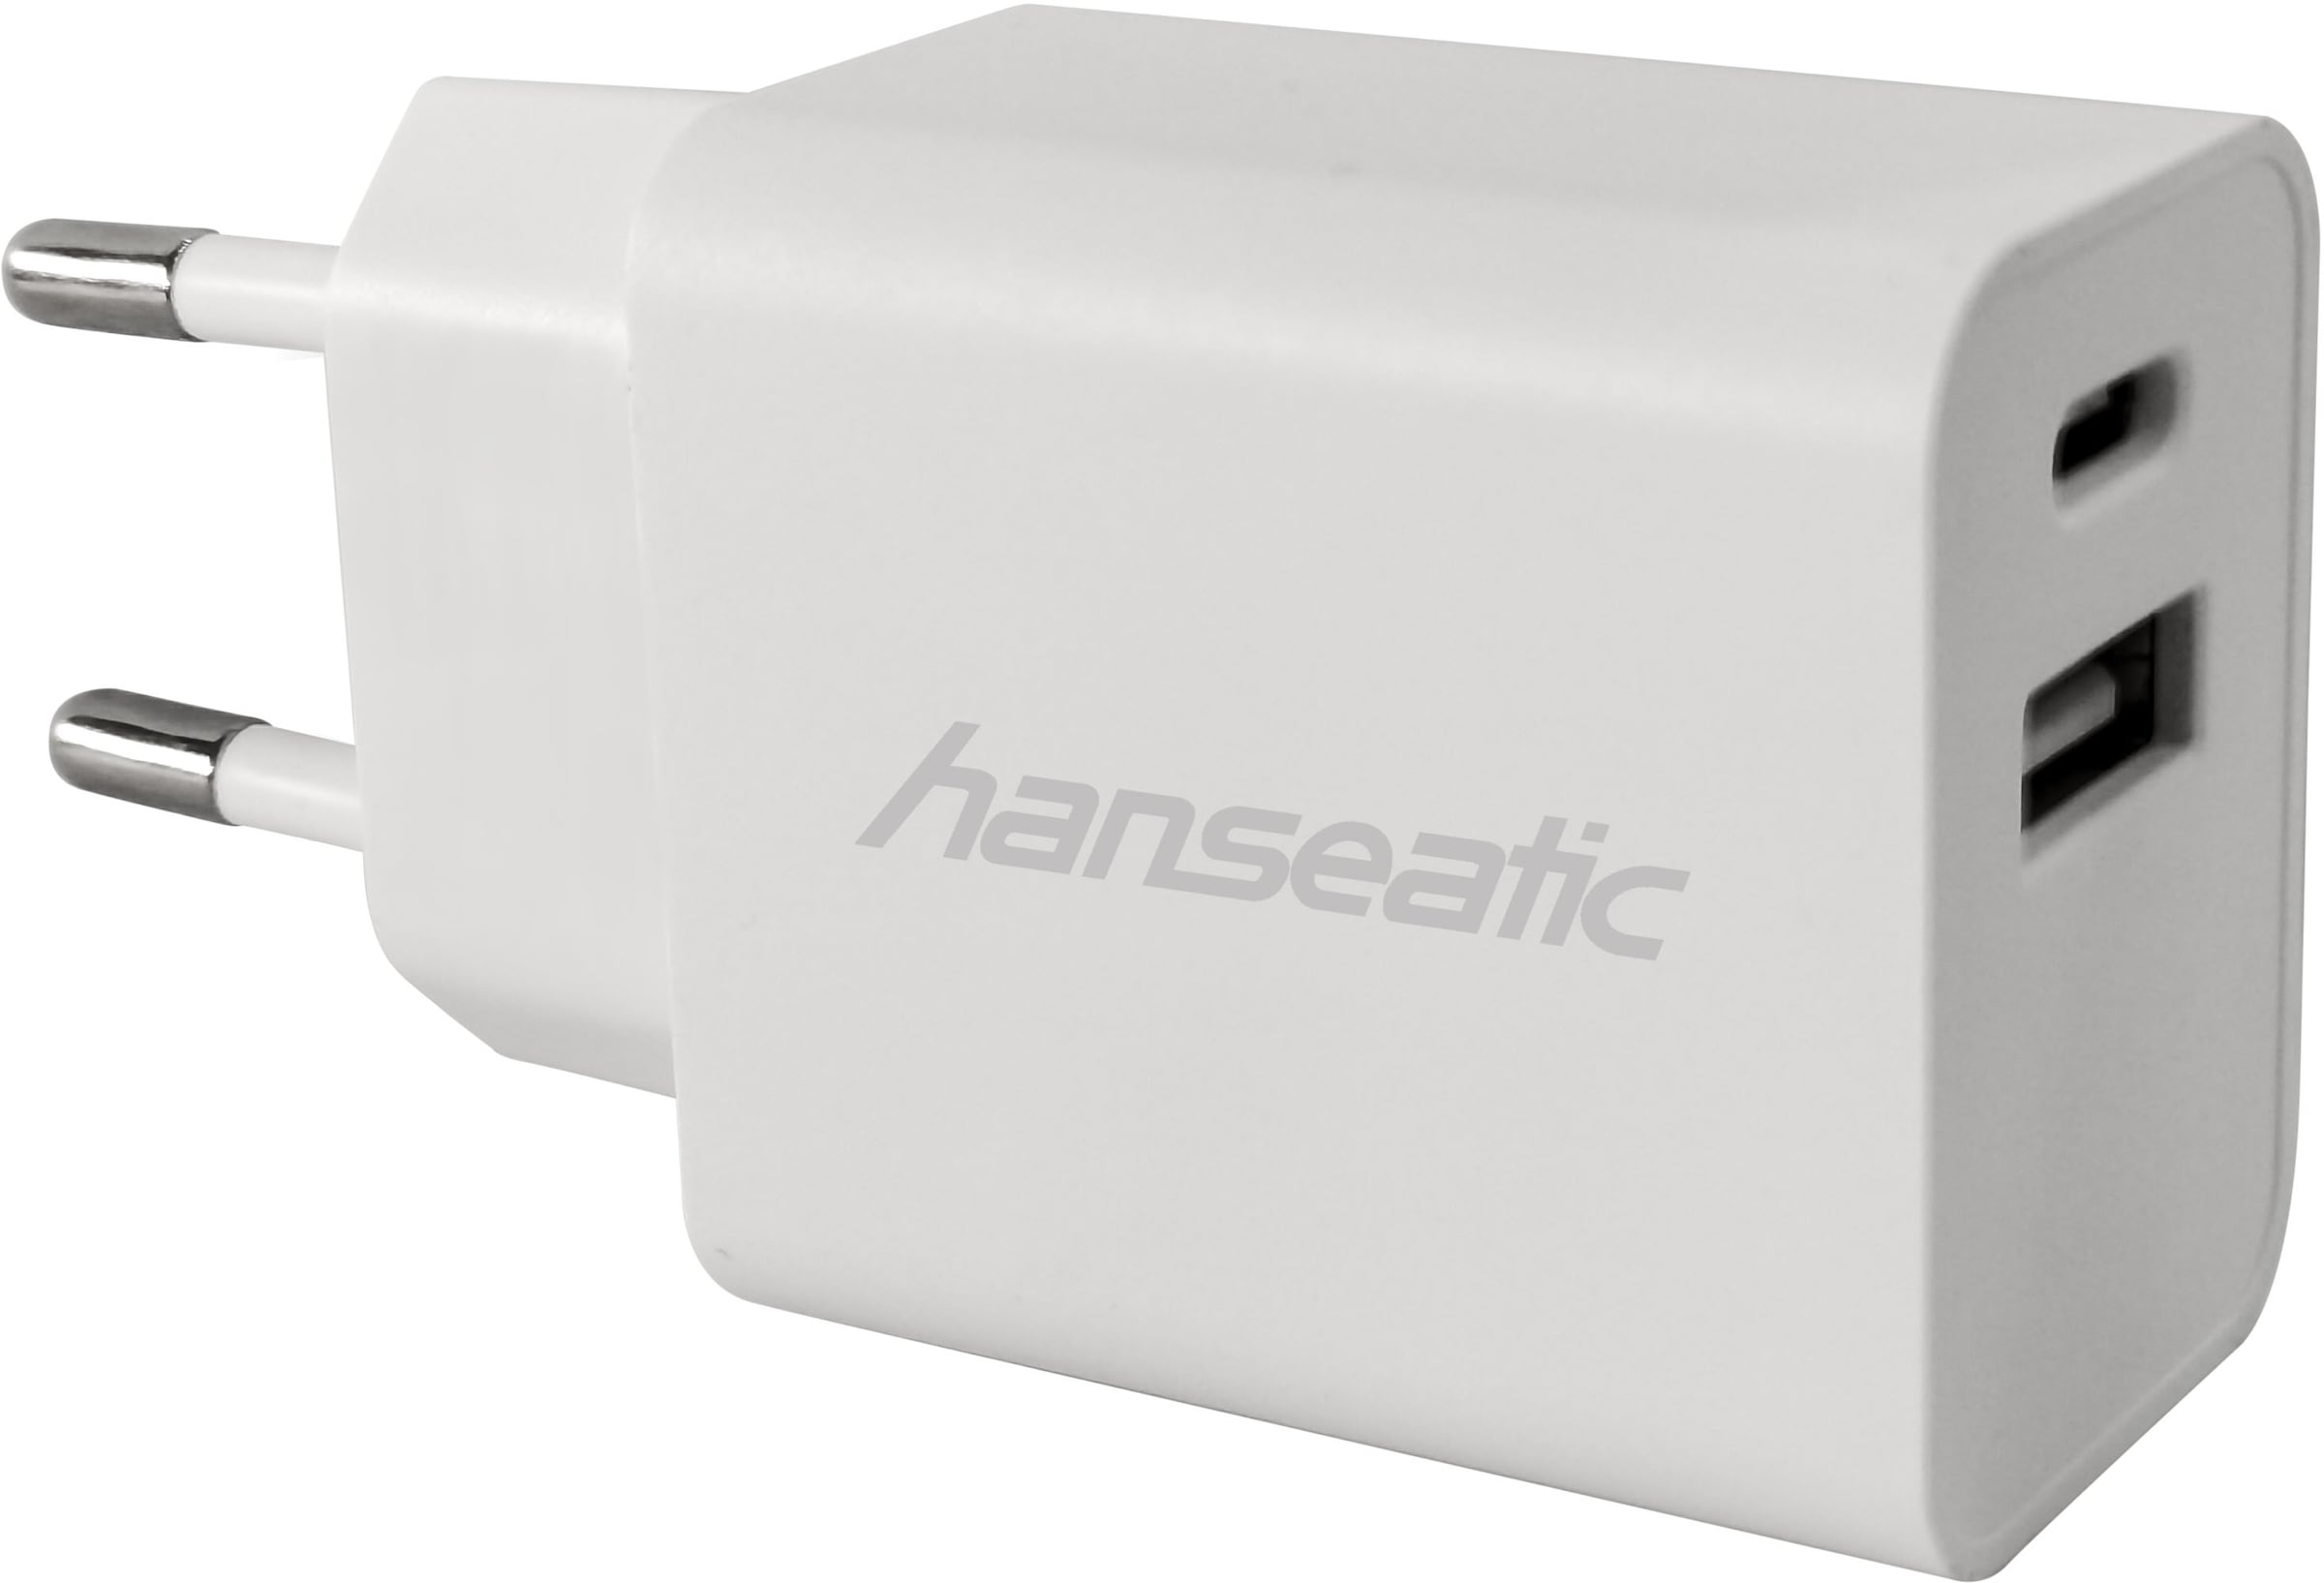 (Power Smartphone-Ladegerät, 20W | universal Ladekabel Ladegerät Hanseatic Delivery und BAUR USB (PD)